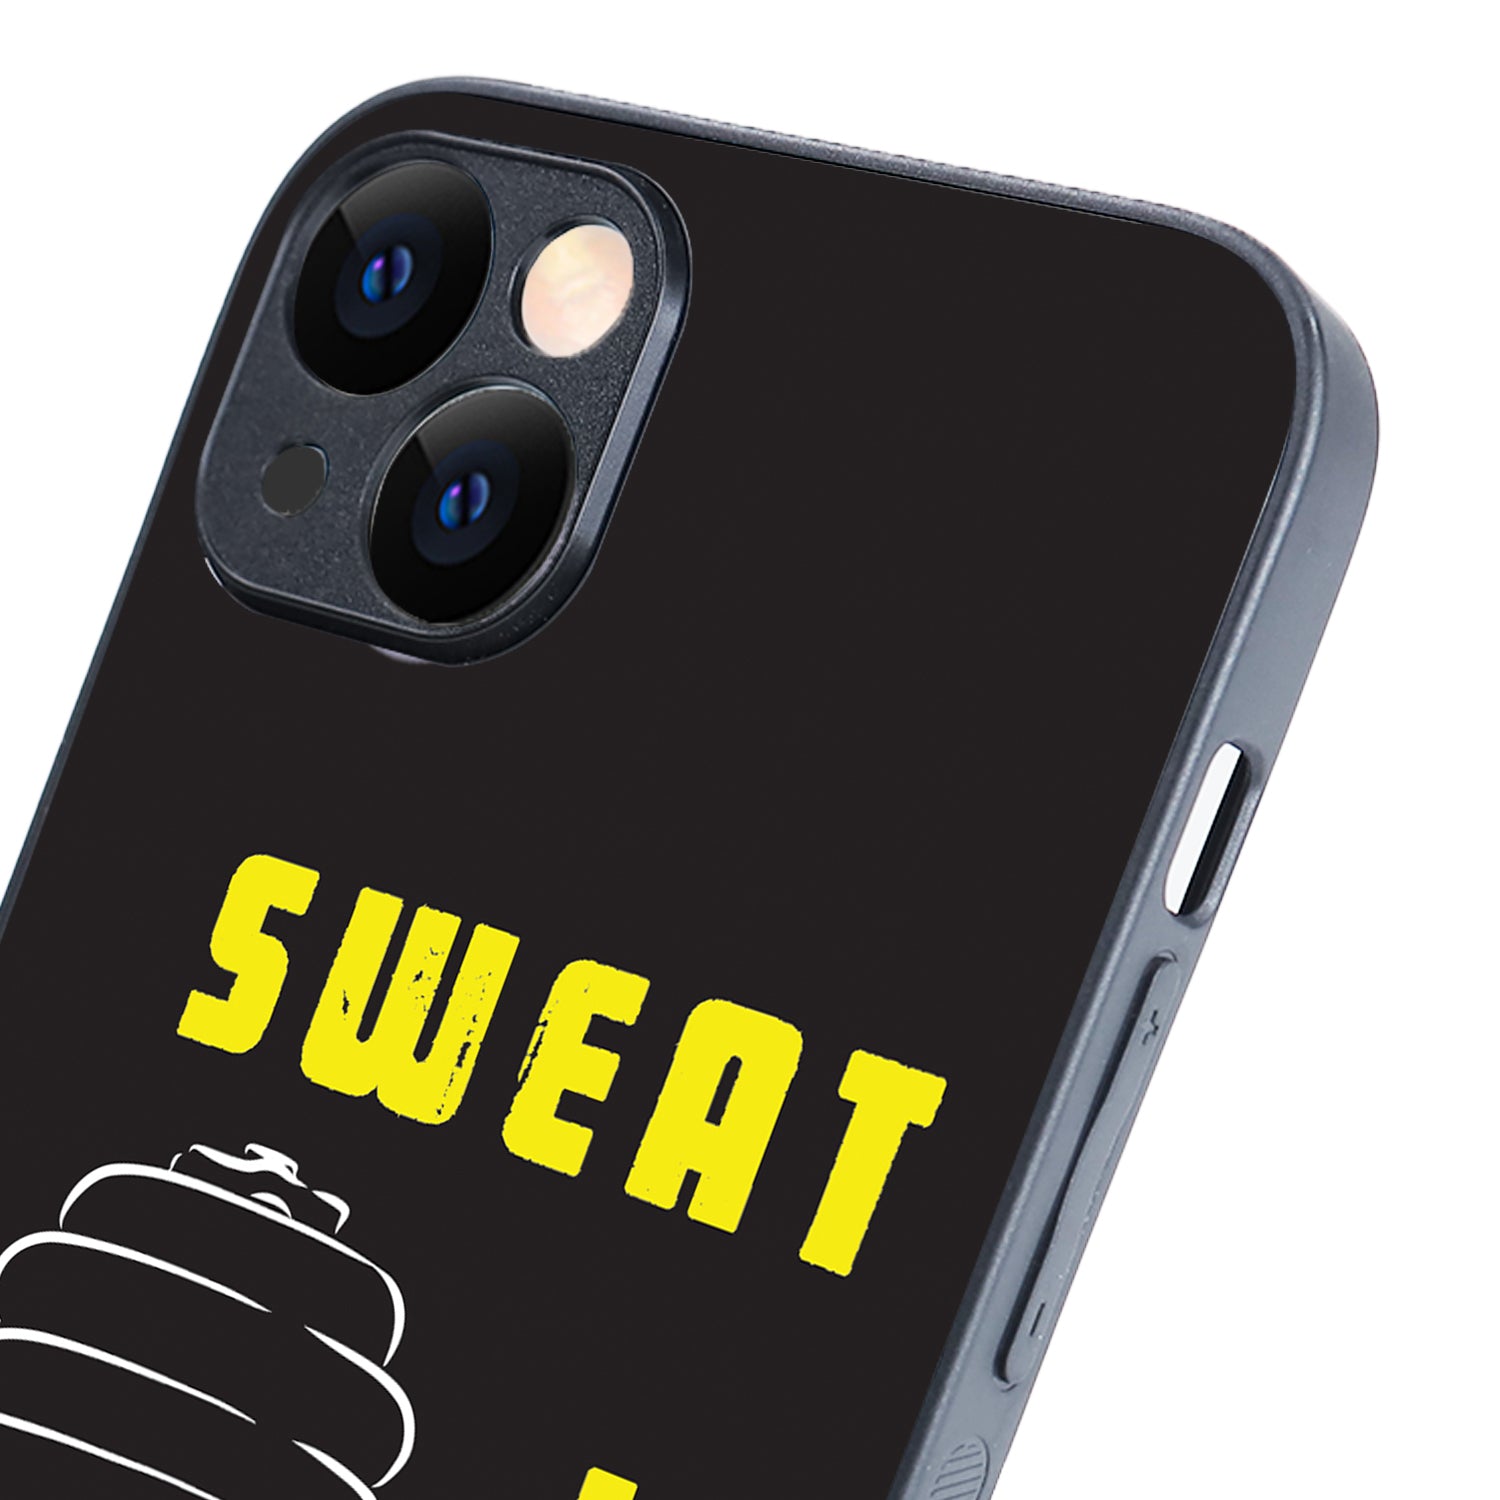 Sweat It Out Motivational Quotes iPhone 14 Plus Case